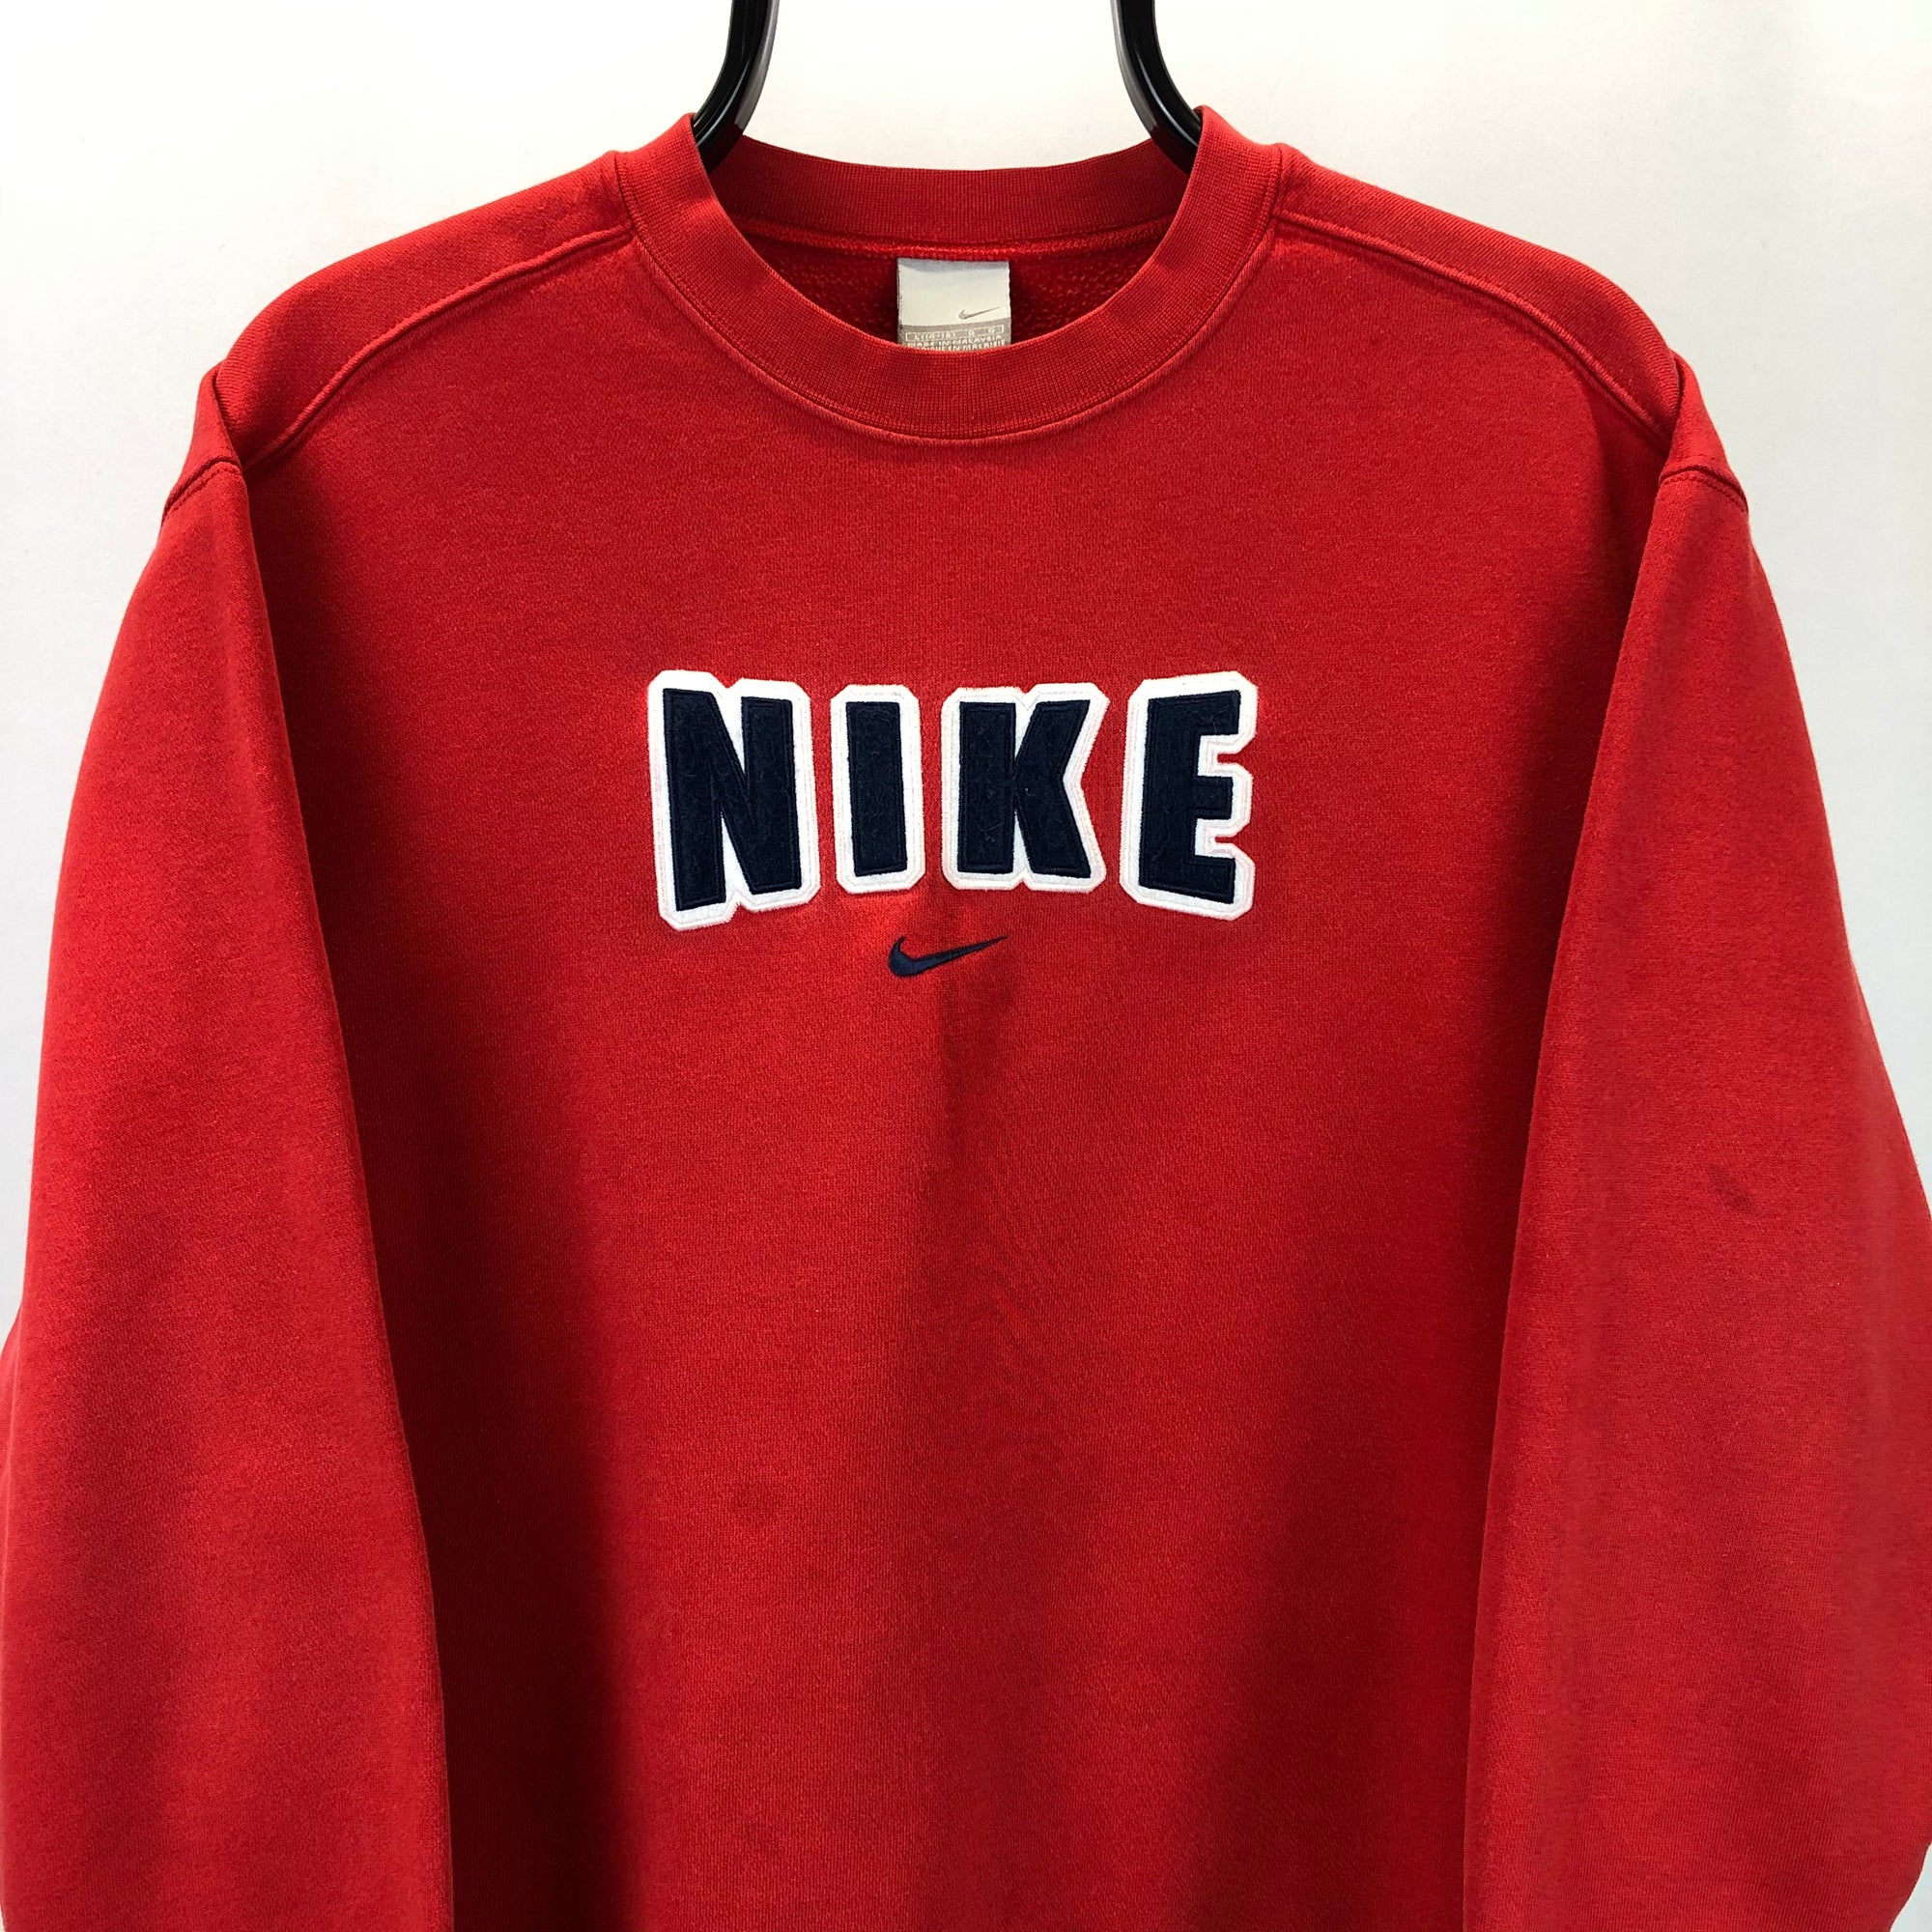 Vintage Nike Spellout Sweatshirt in Red/Navy - Men's Small/Women's Medium